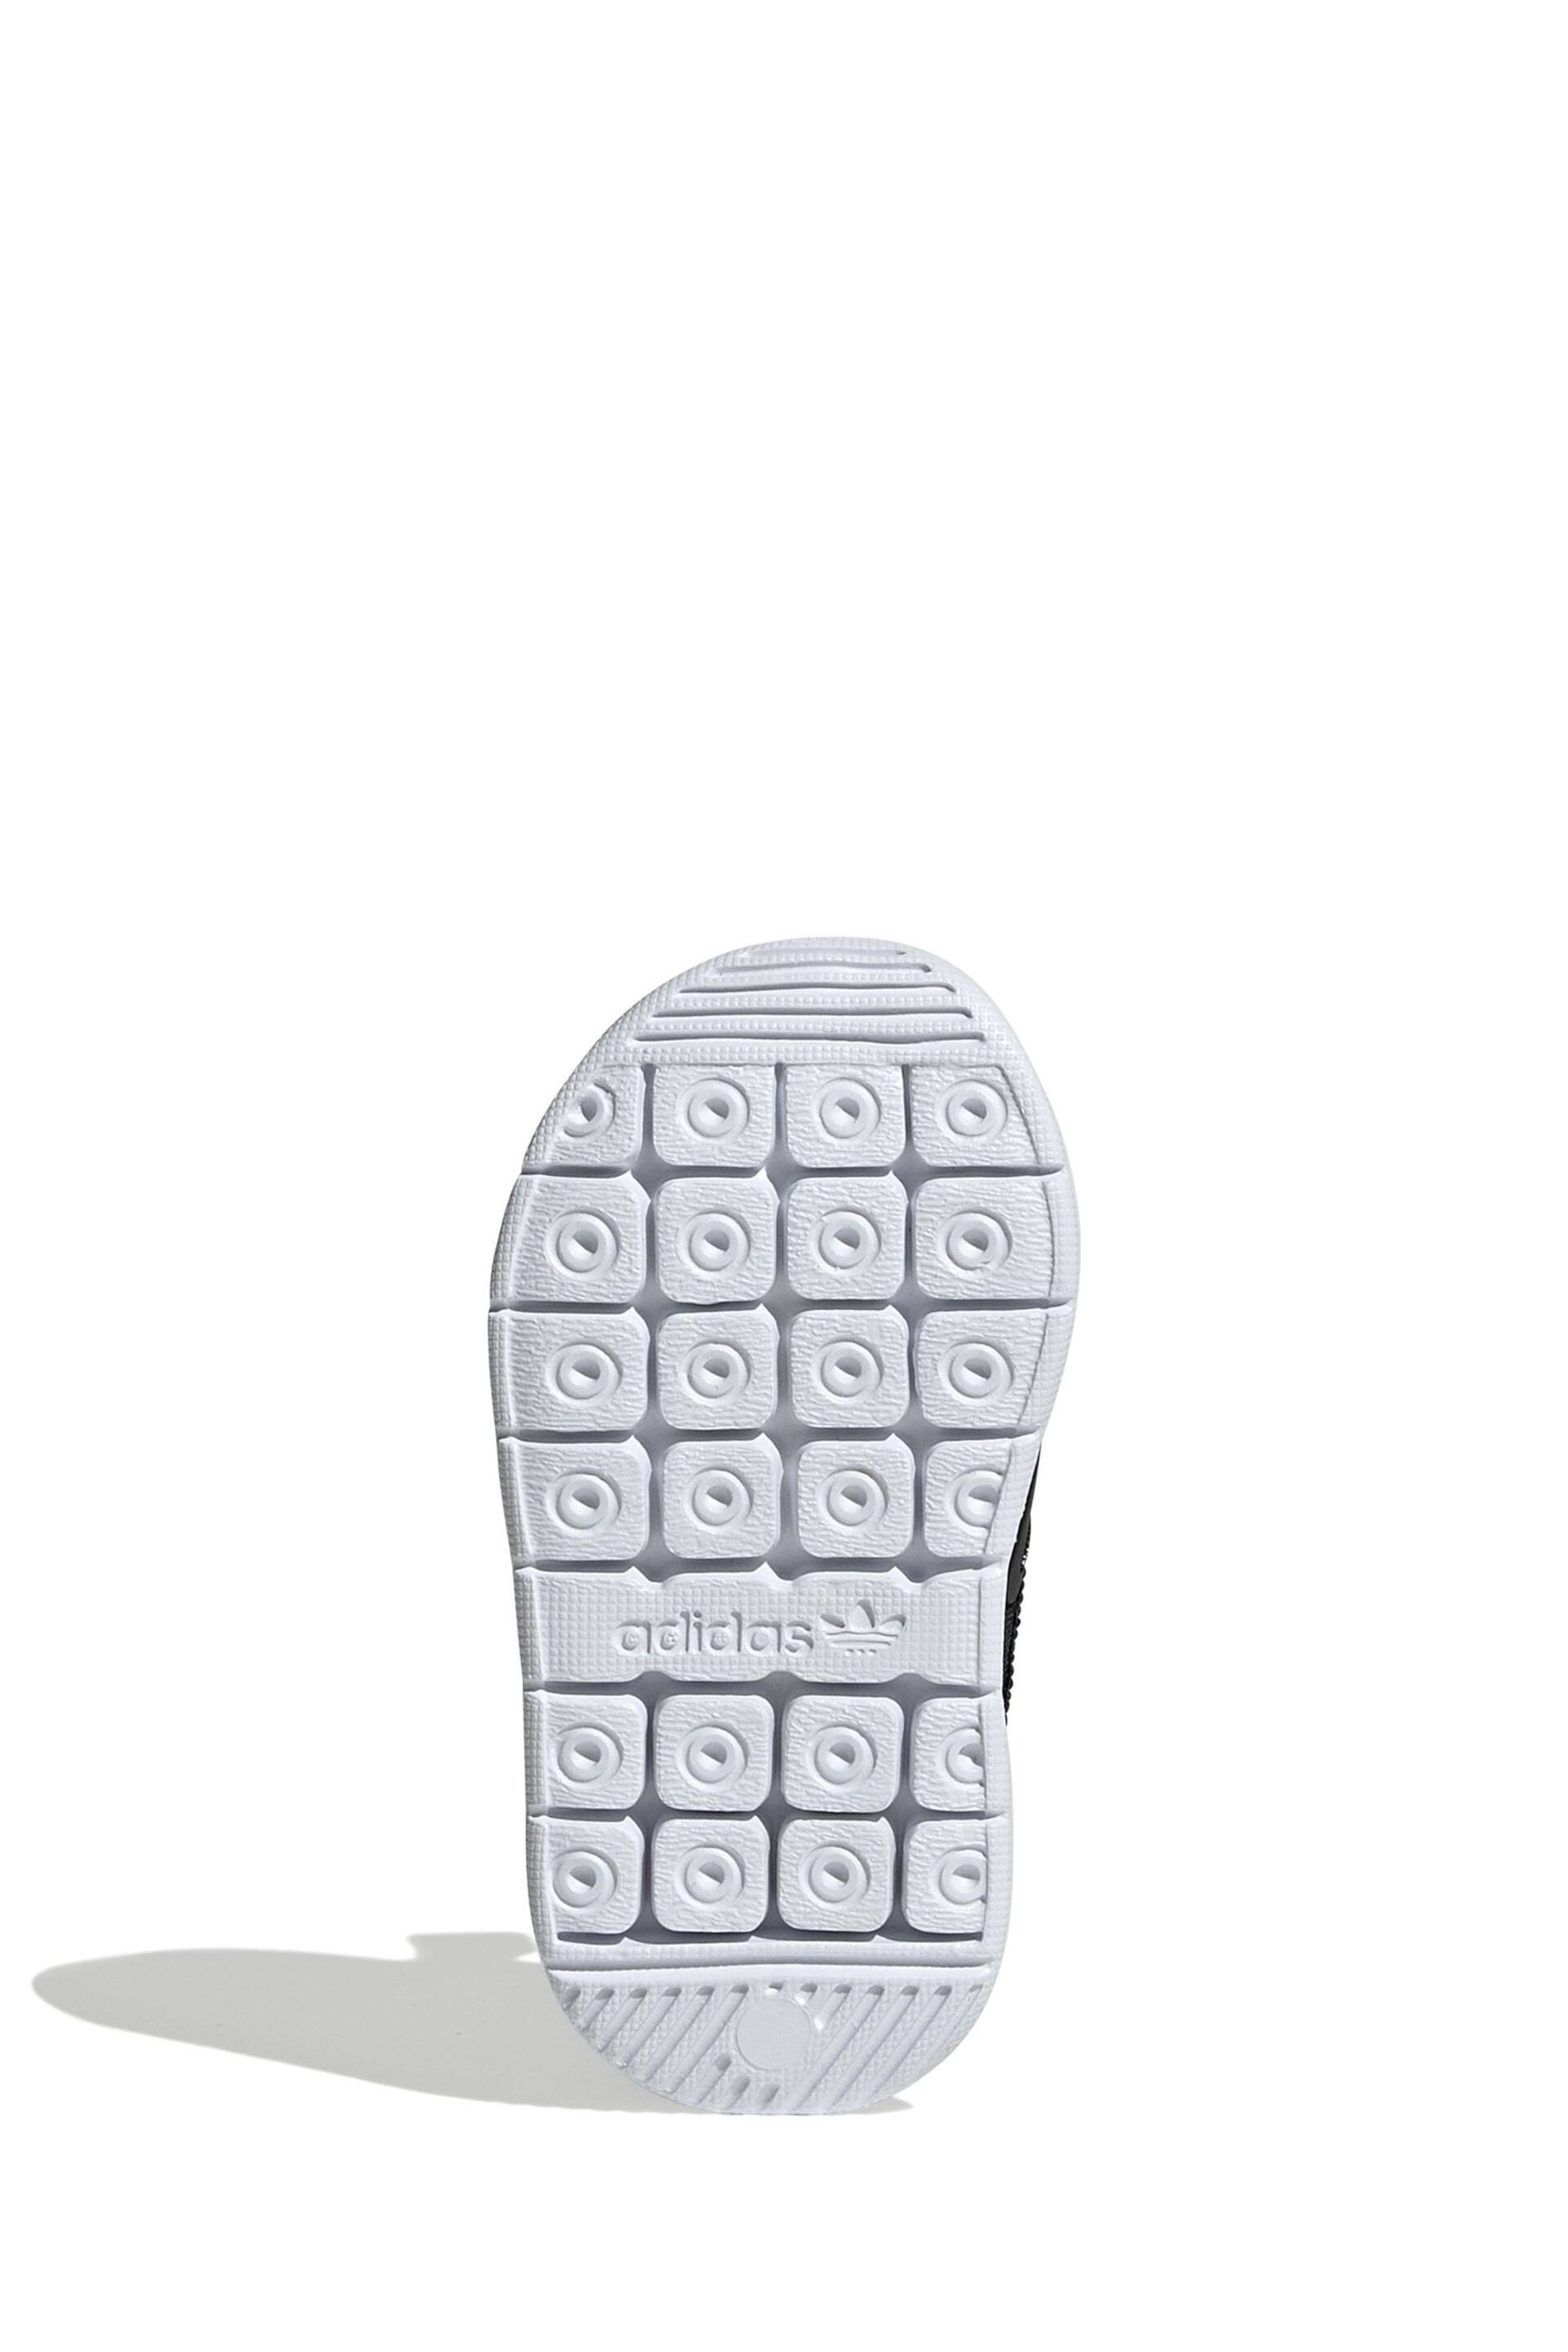 adidas Originals 360 Infant Black Sandals - Image 5 of 8